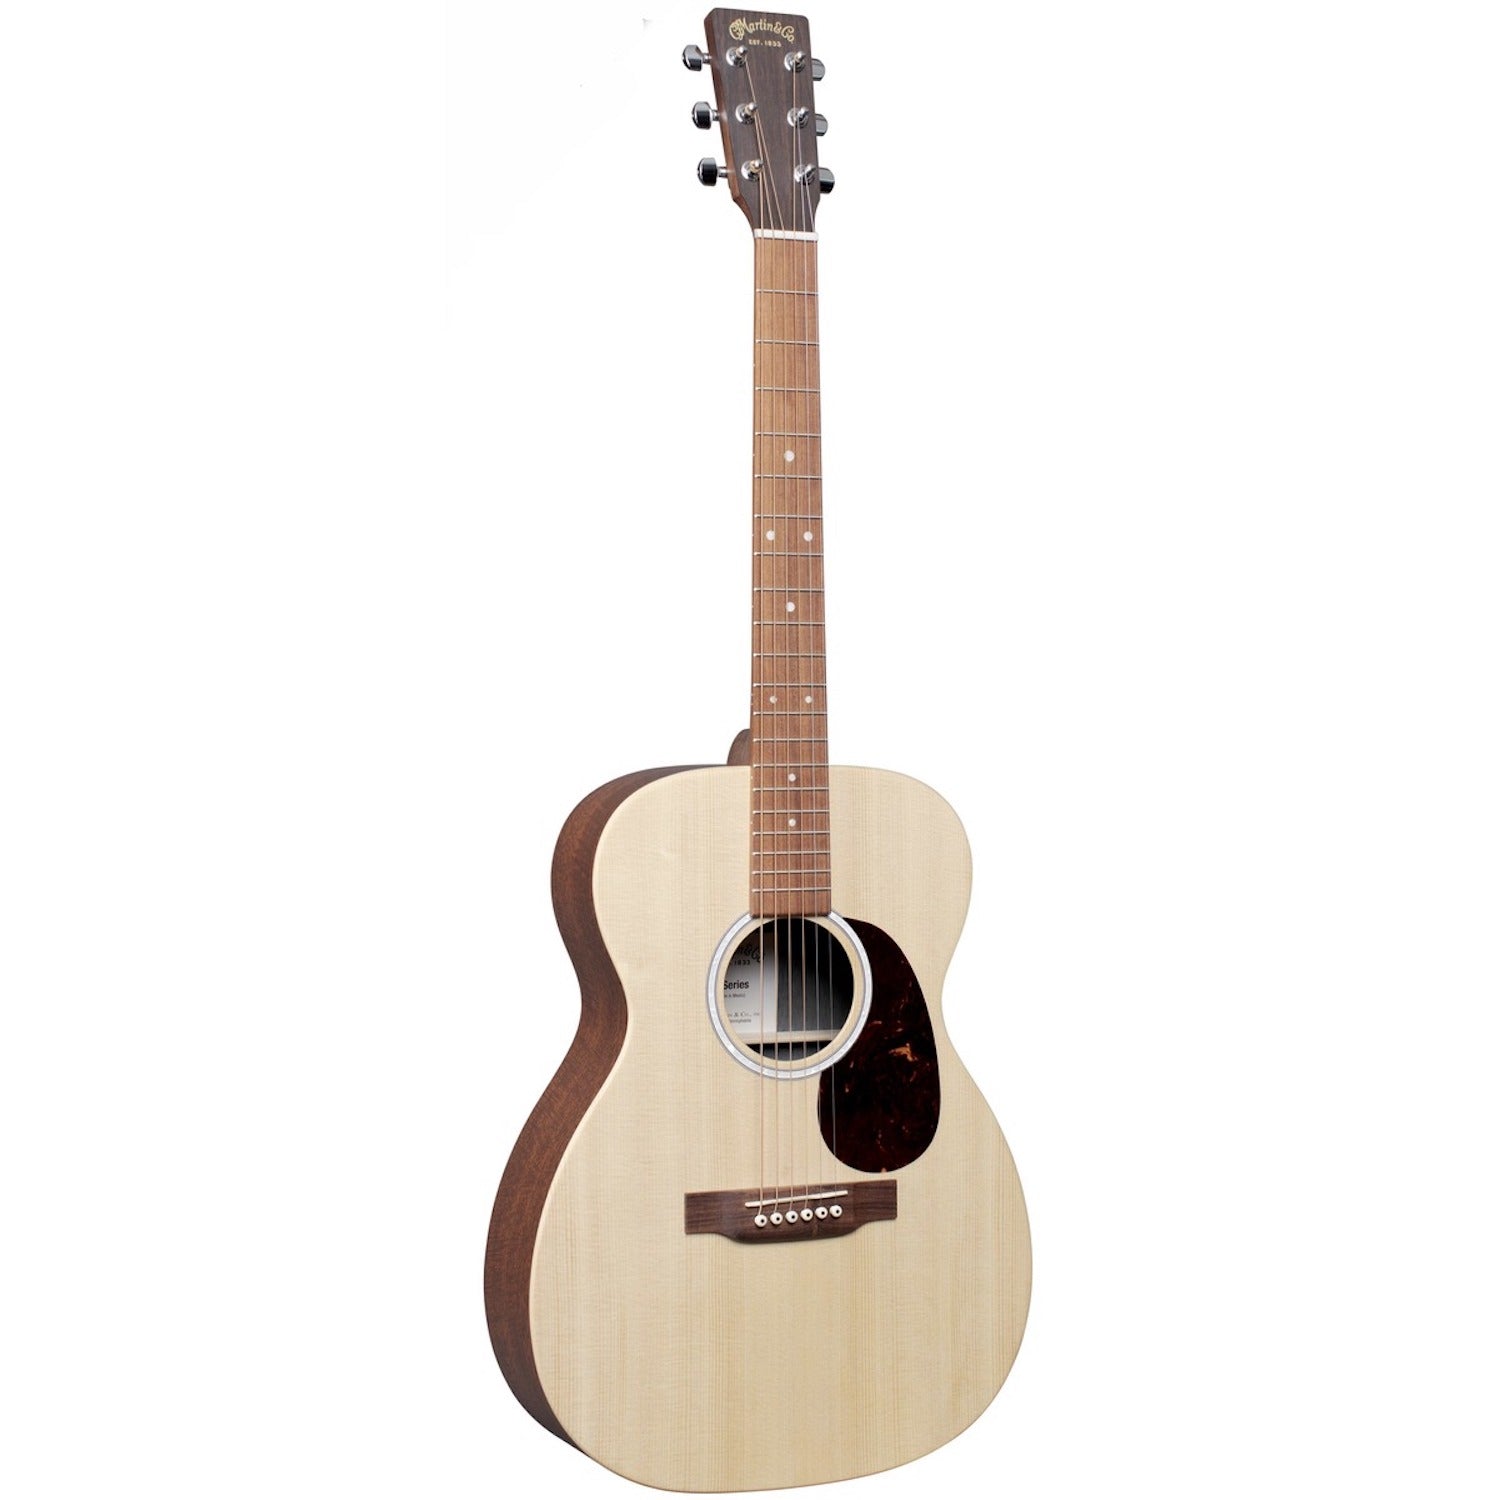 C.F. Martin & Co. Guitars | Buy Martin Guitars Online – Page 3 